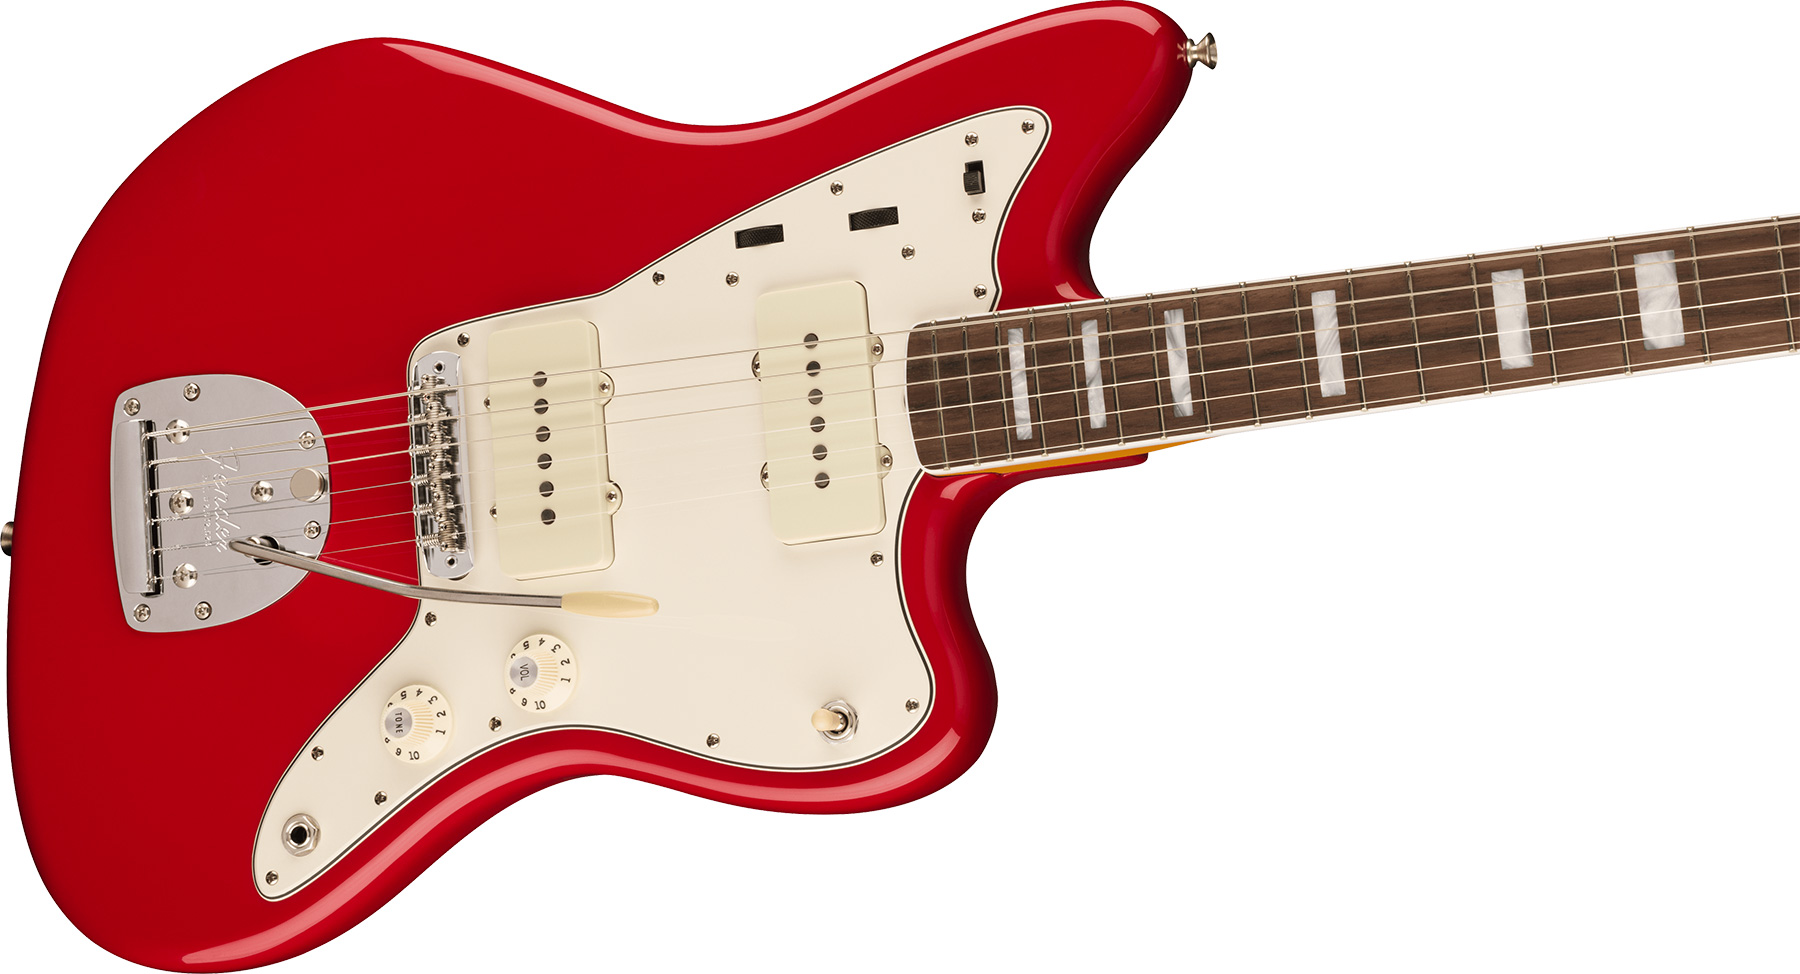 Fender Jazzmaster 1966 American Vintage Ii Usa Sh Trem Rw - Dakota Red - Retro-rock elektrische gitaar - Variation 2